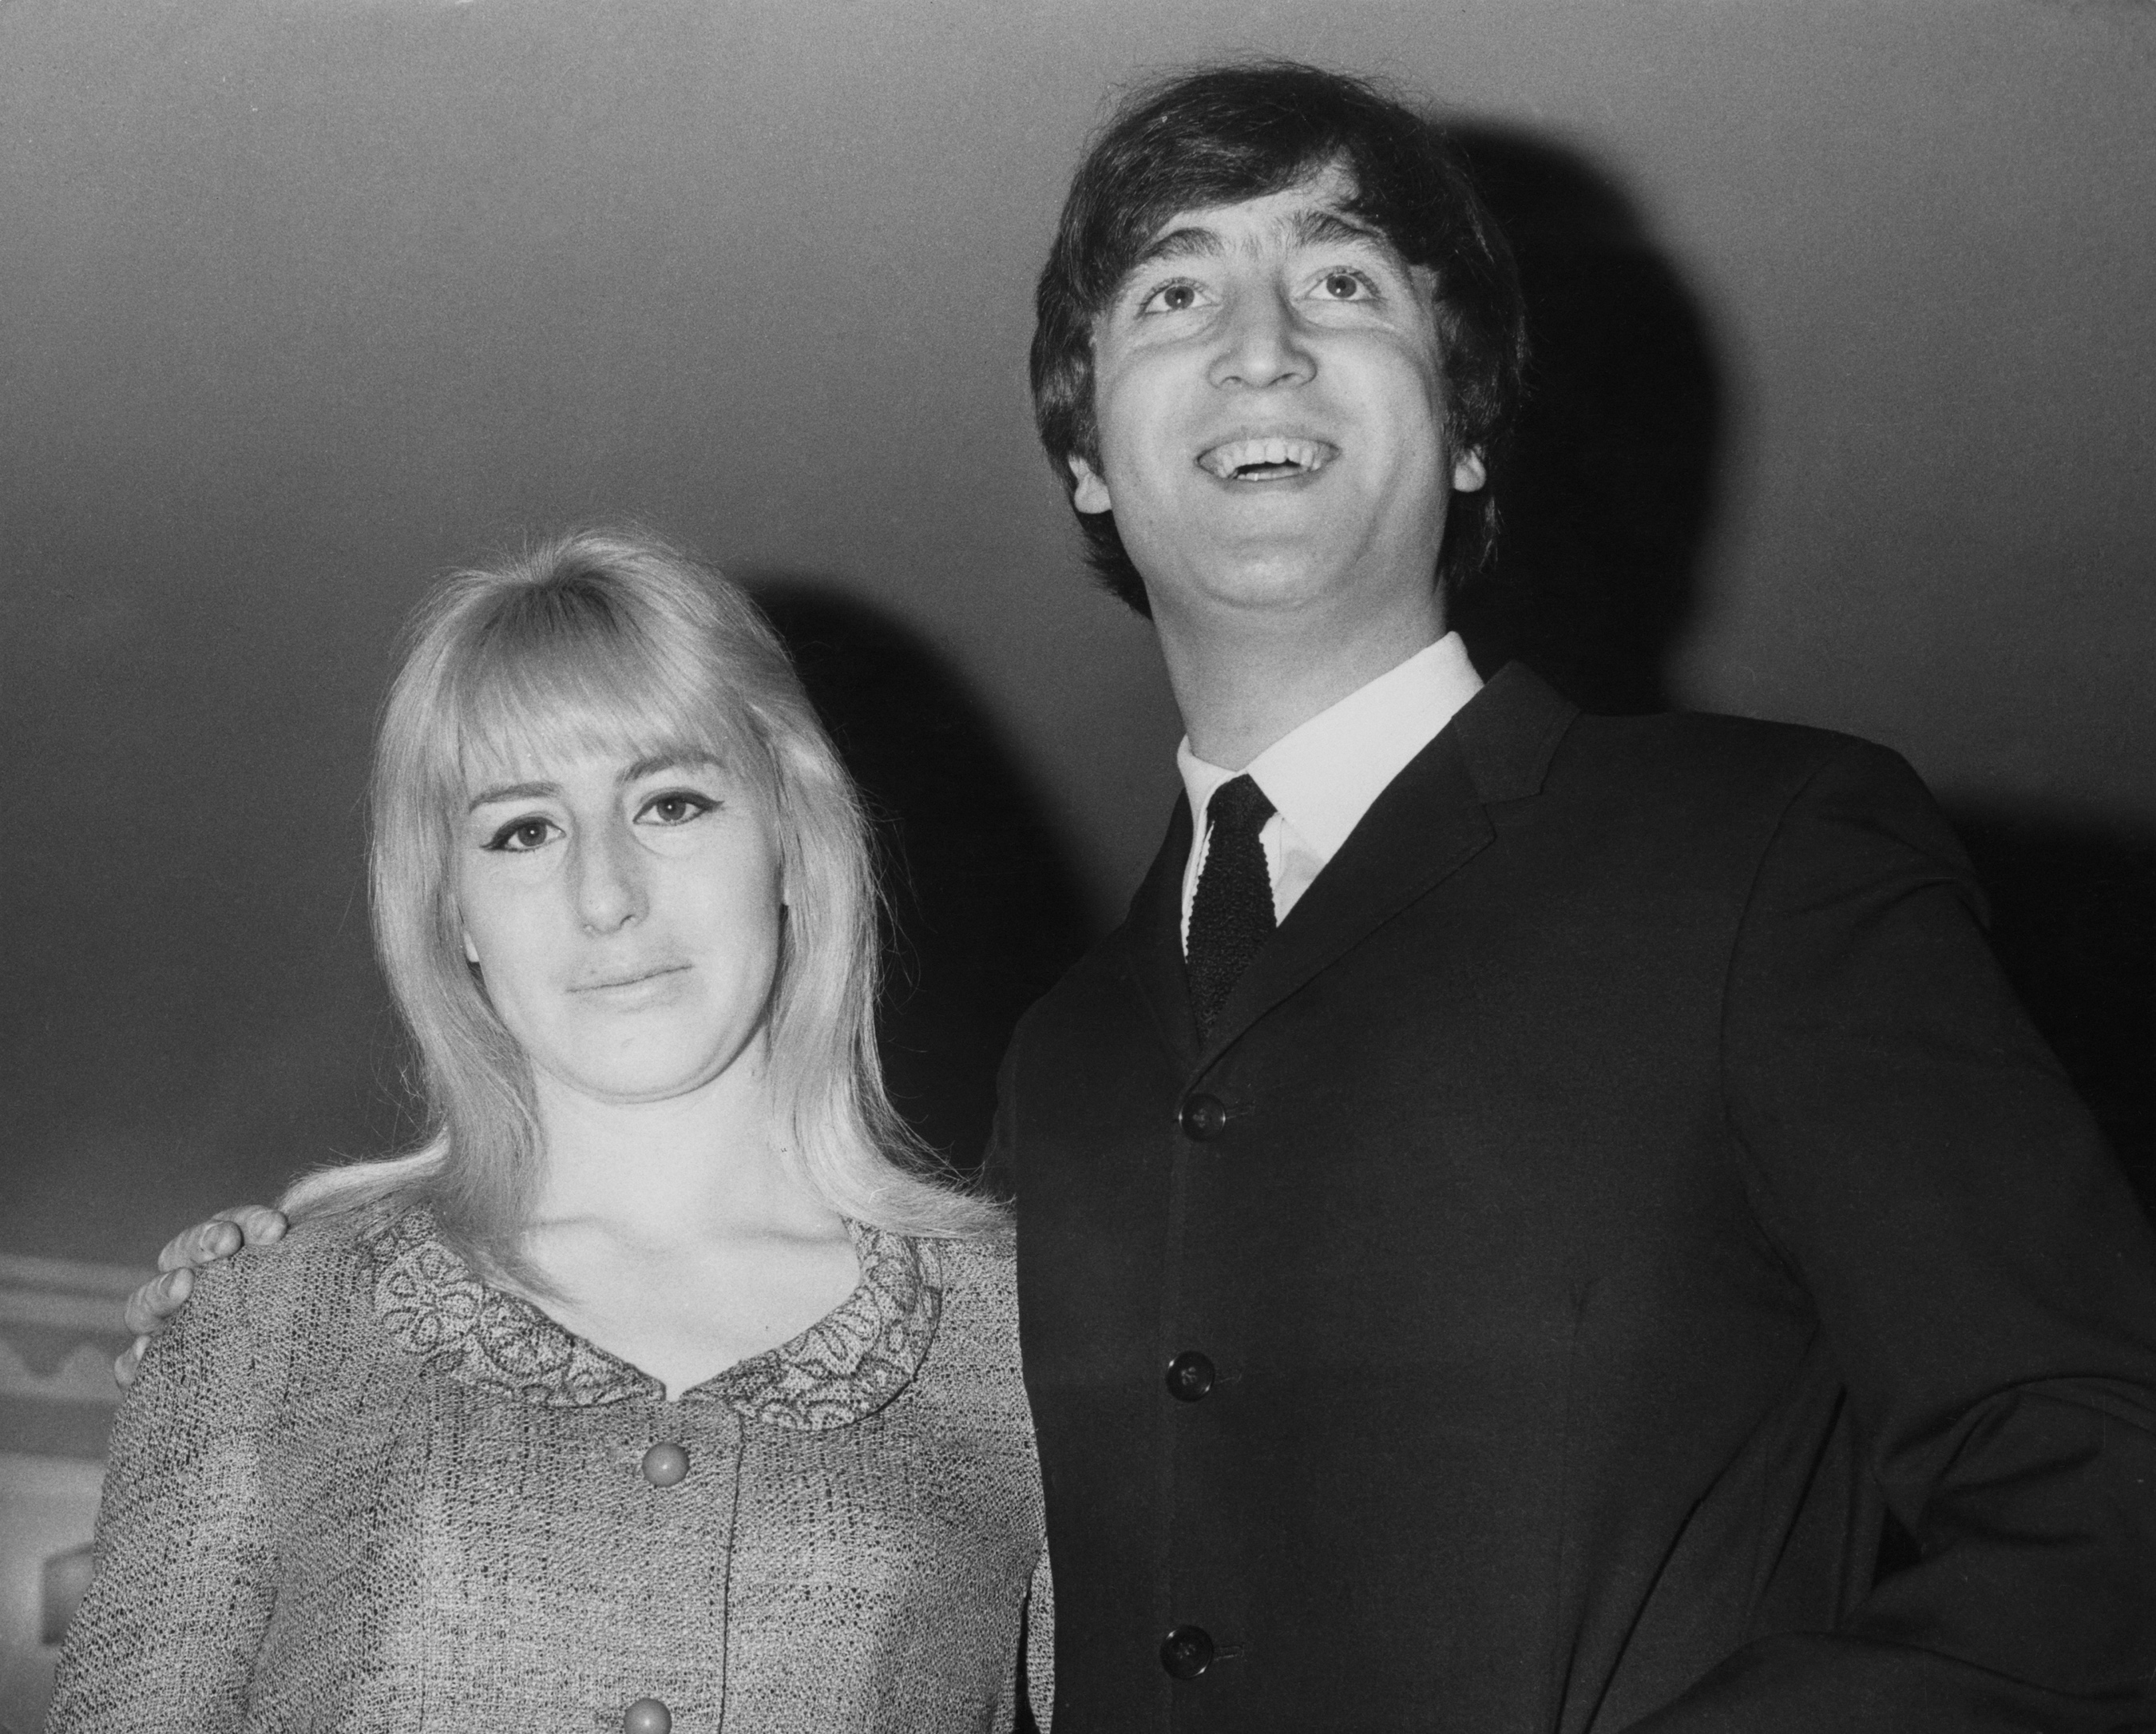 Denn John Lennon war „besorgt“.[ed]‘ Über die Heirat mit Cynthia Lennon